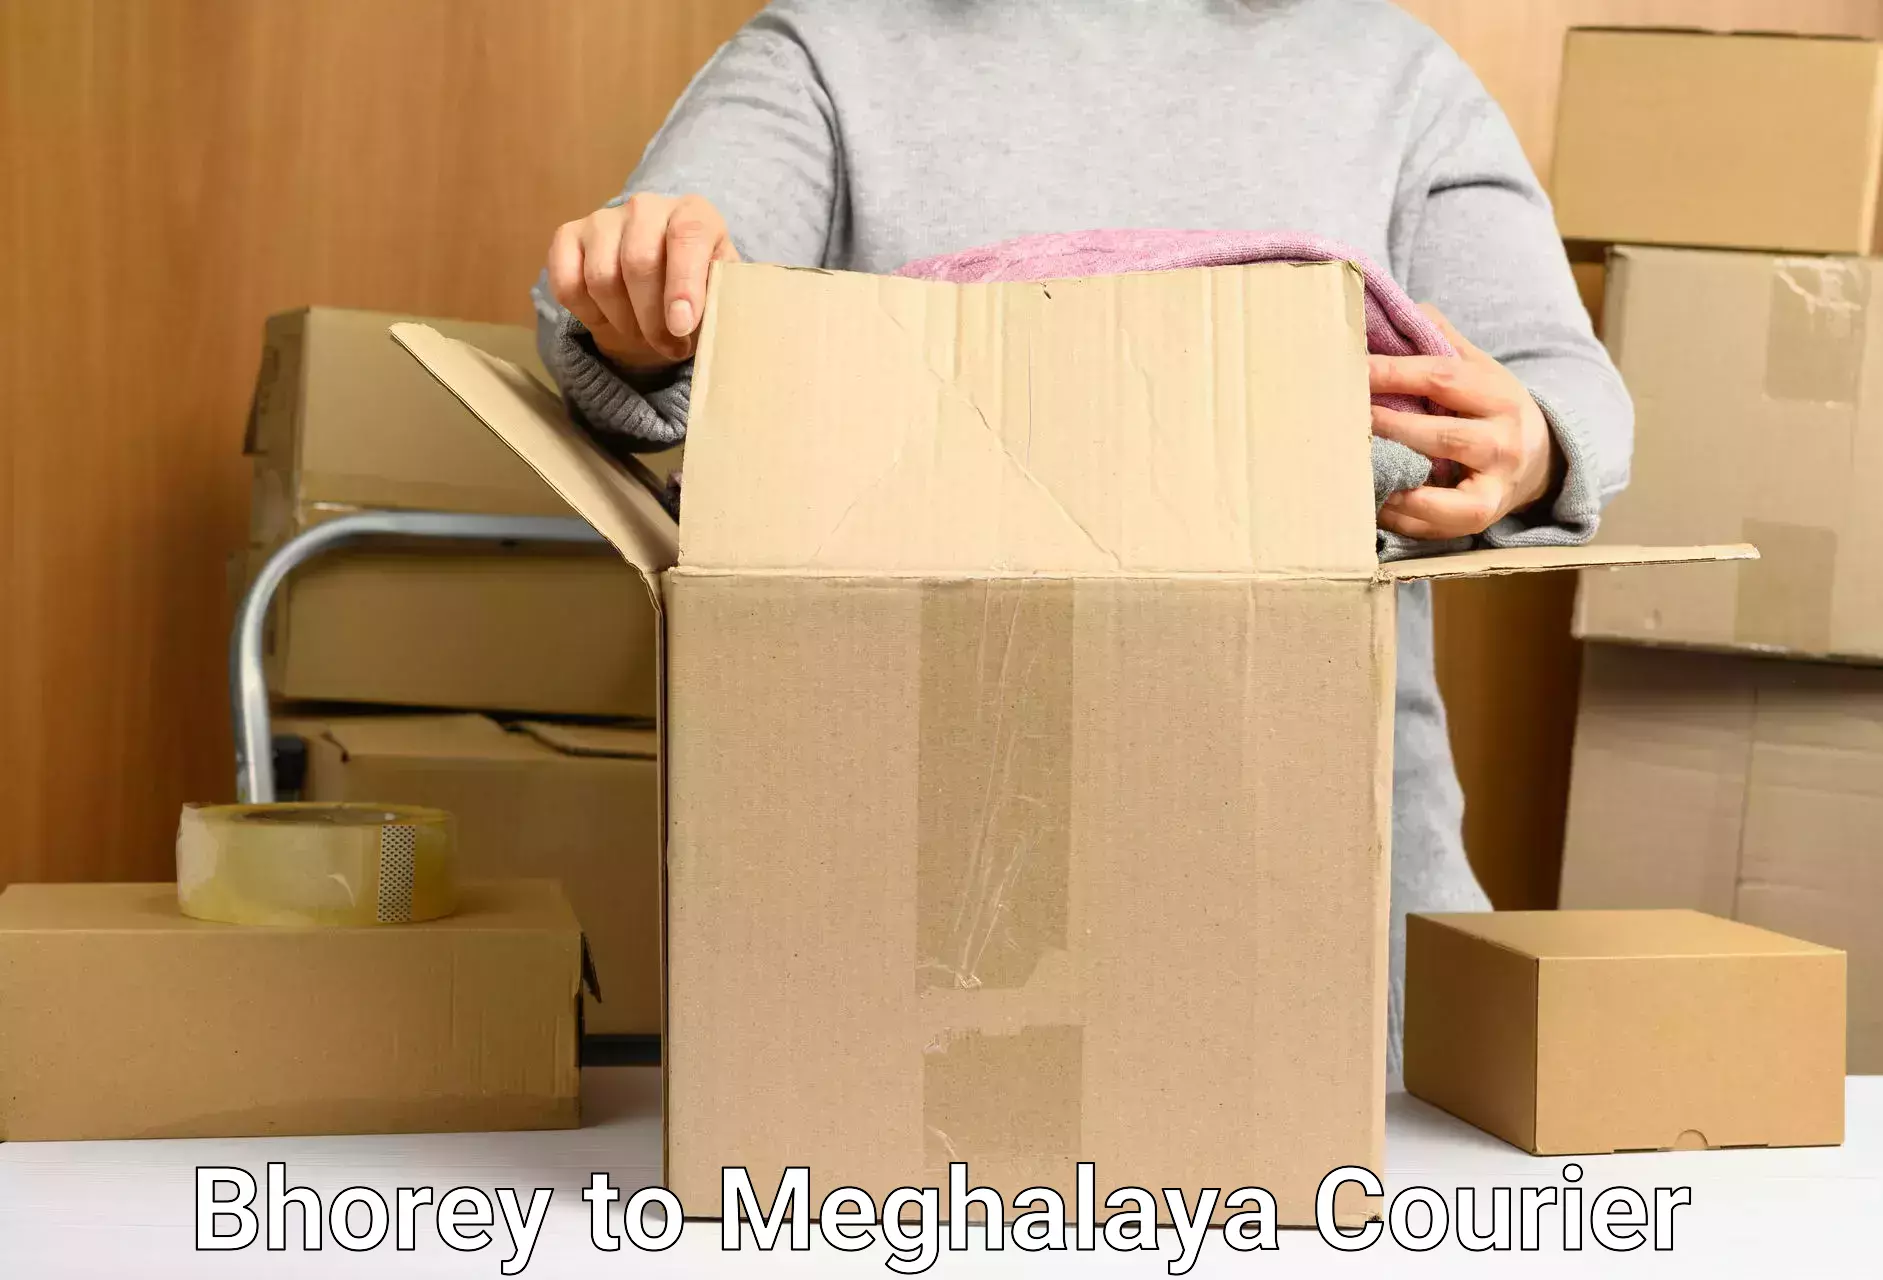 Efficient parcel delivery in Bhorey to Williamnagar